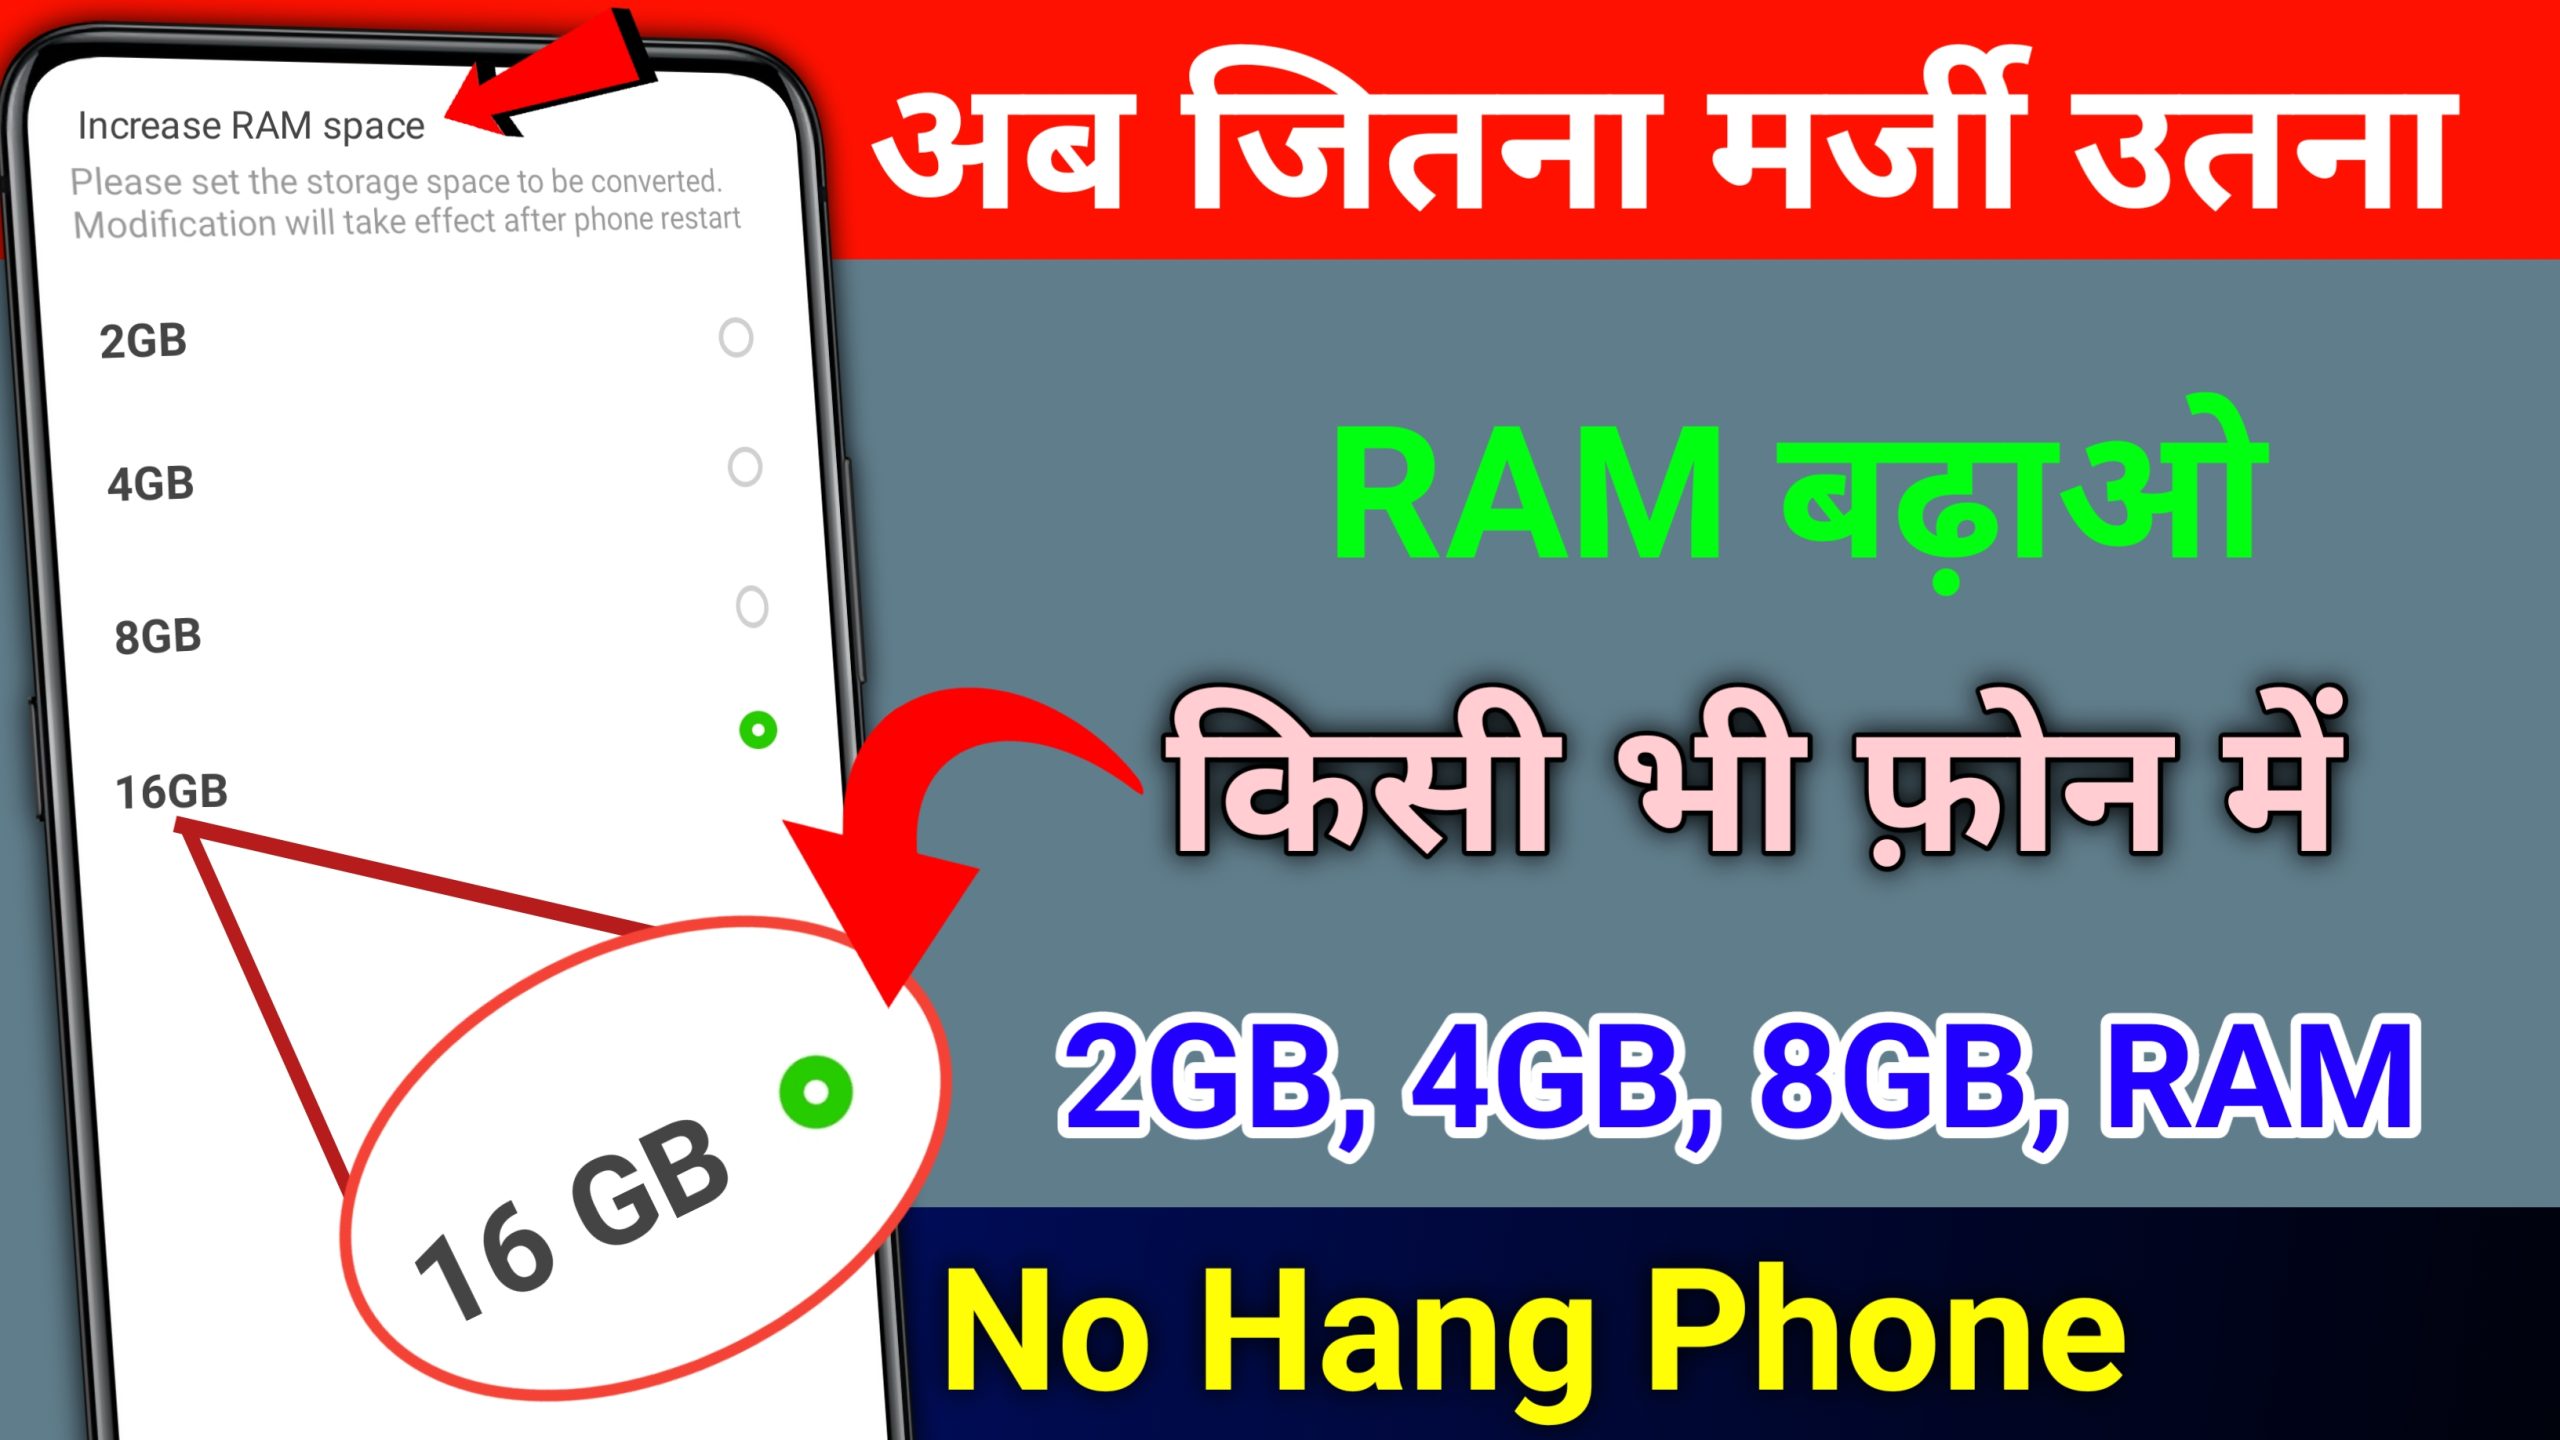 Android Phone ki RAM kaise Badhaye